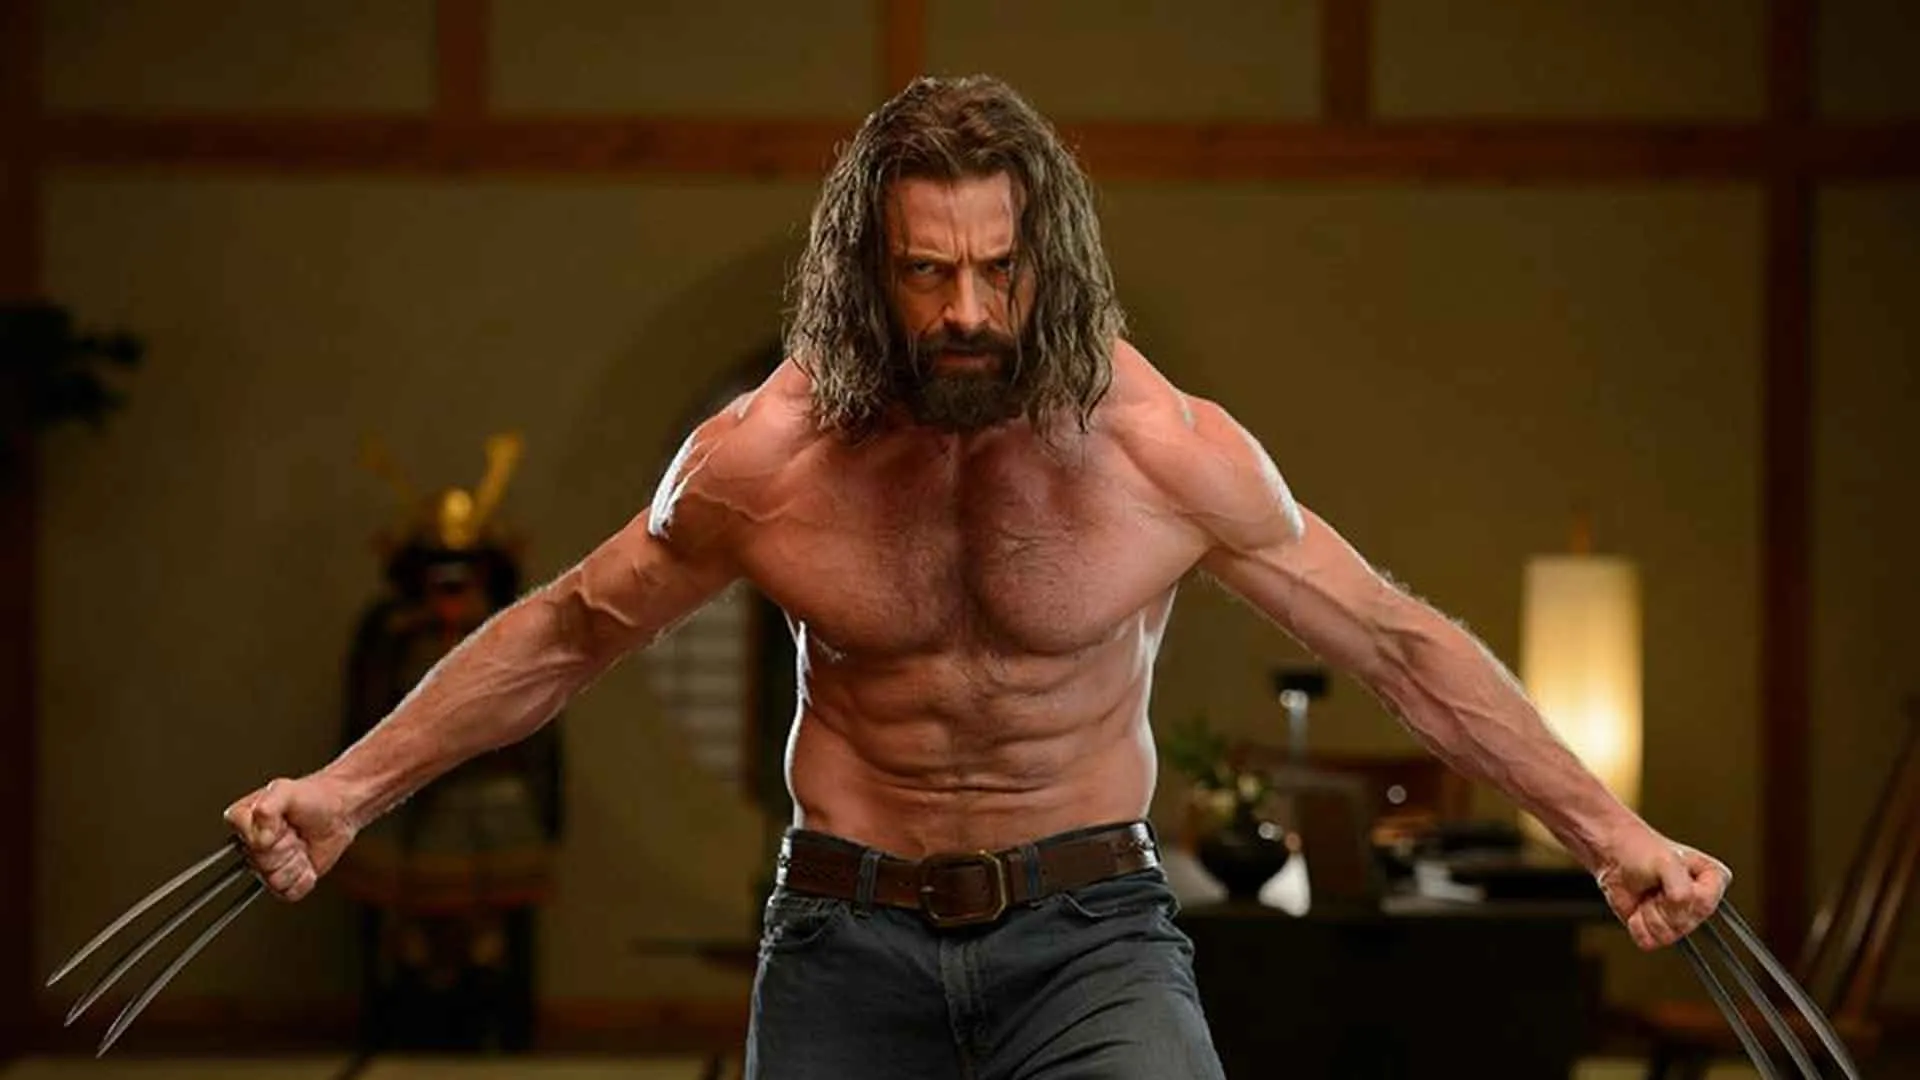 Hugh Jackman's ripped body as Wolverine